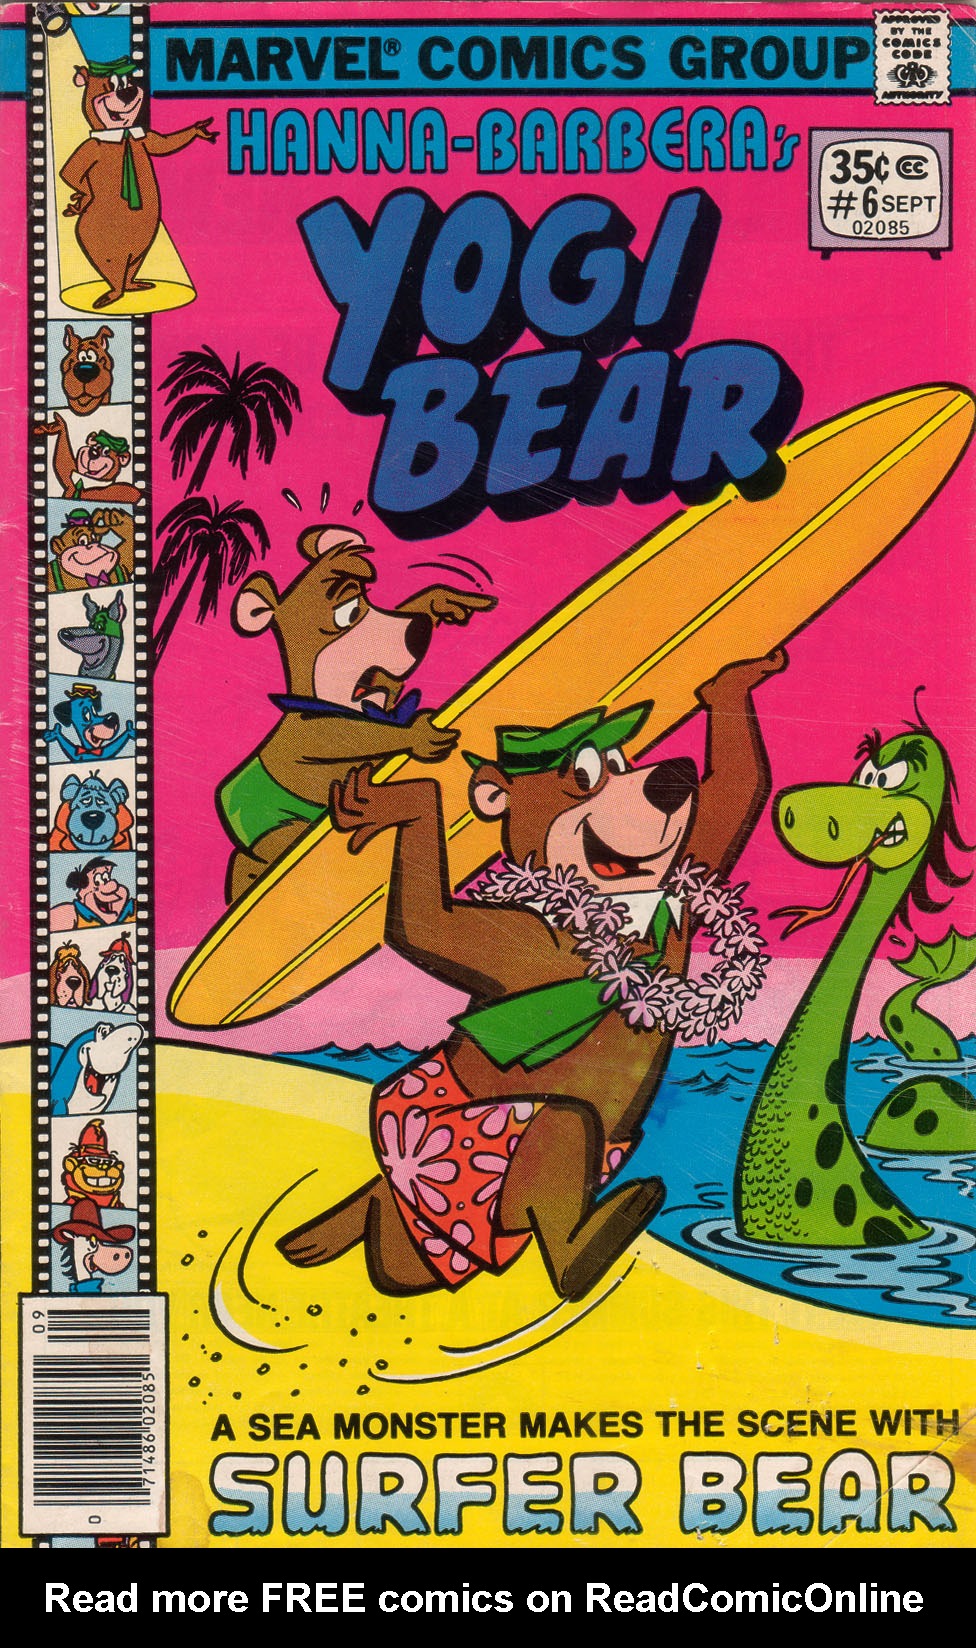 Yogi Bear Issue 6 | Read Yogi Bear Issue 6 comic online in high quality.  Read Full Comic online for free - Read comics online in high quality .| One  million comics .Com